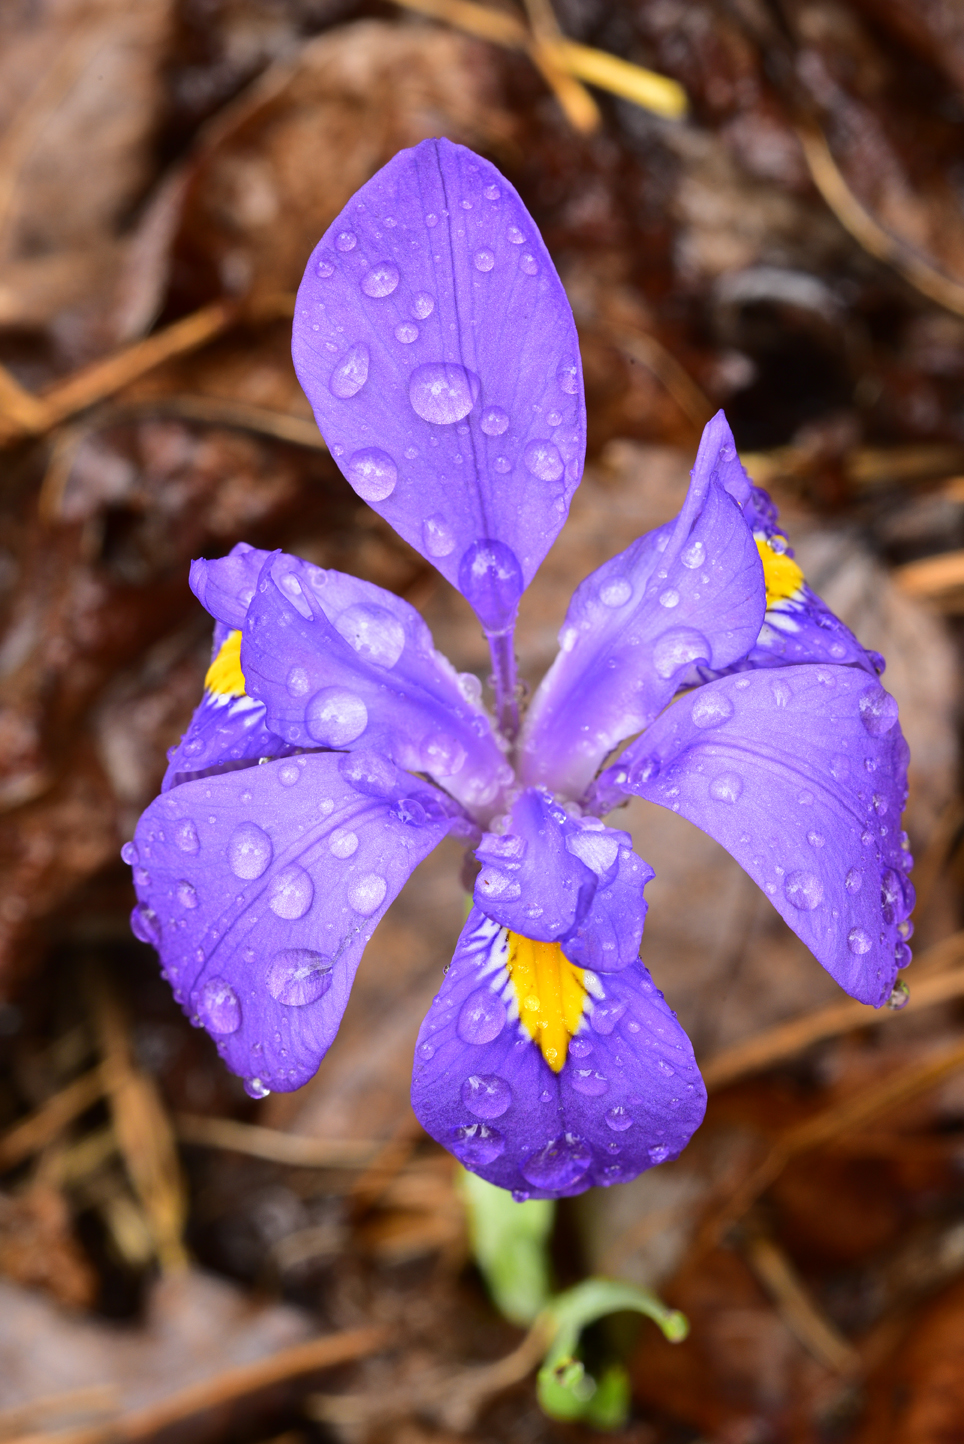 Raindrops on dwarf crested iris  -  Greenville County, South Carolina